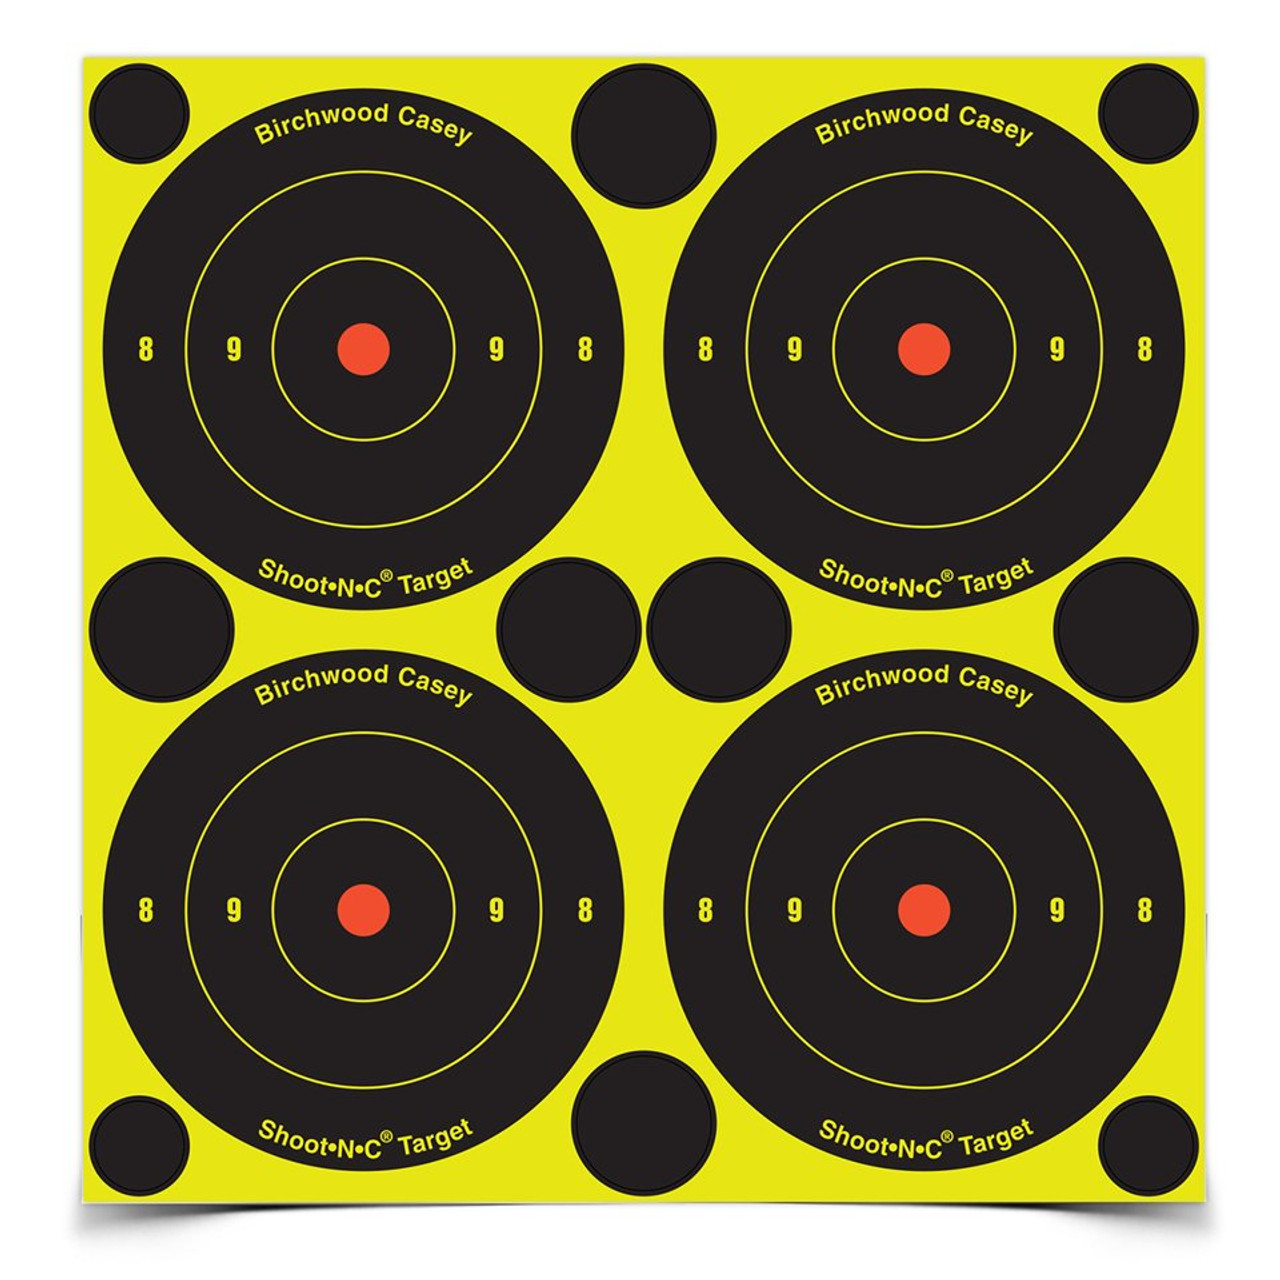 SHoot N C 3" round targets pack of 12 - 4 per sheet